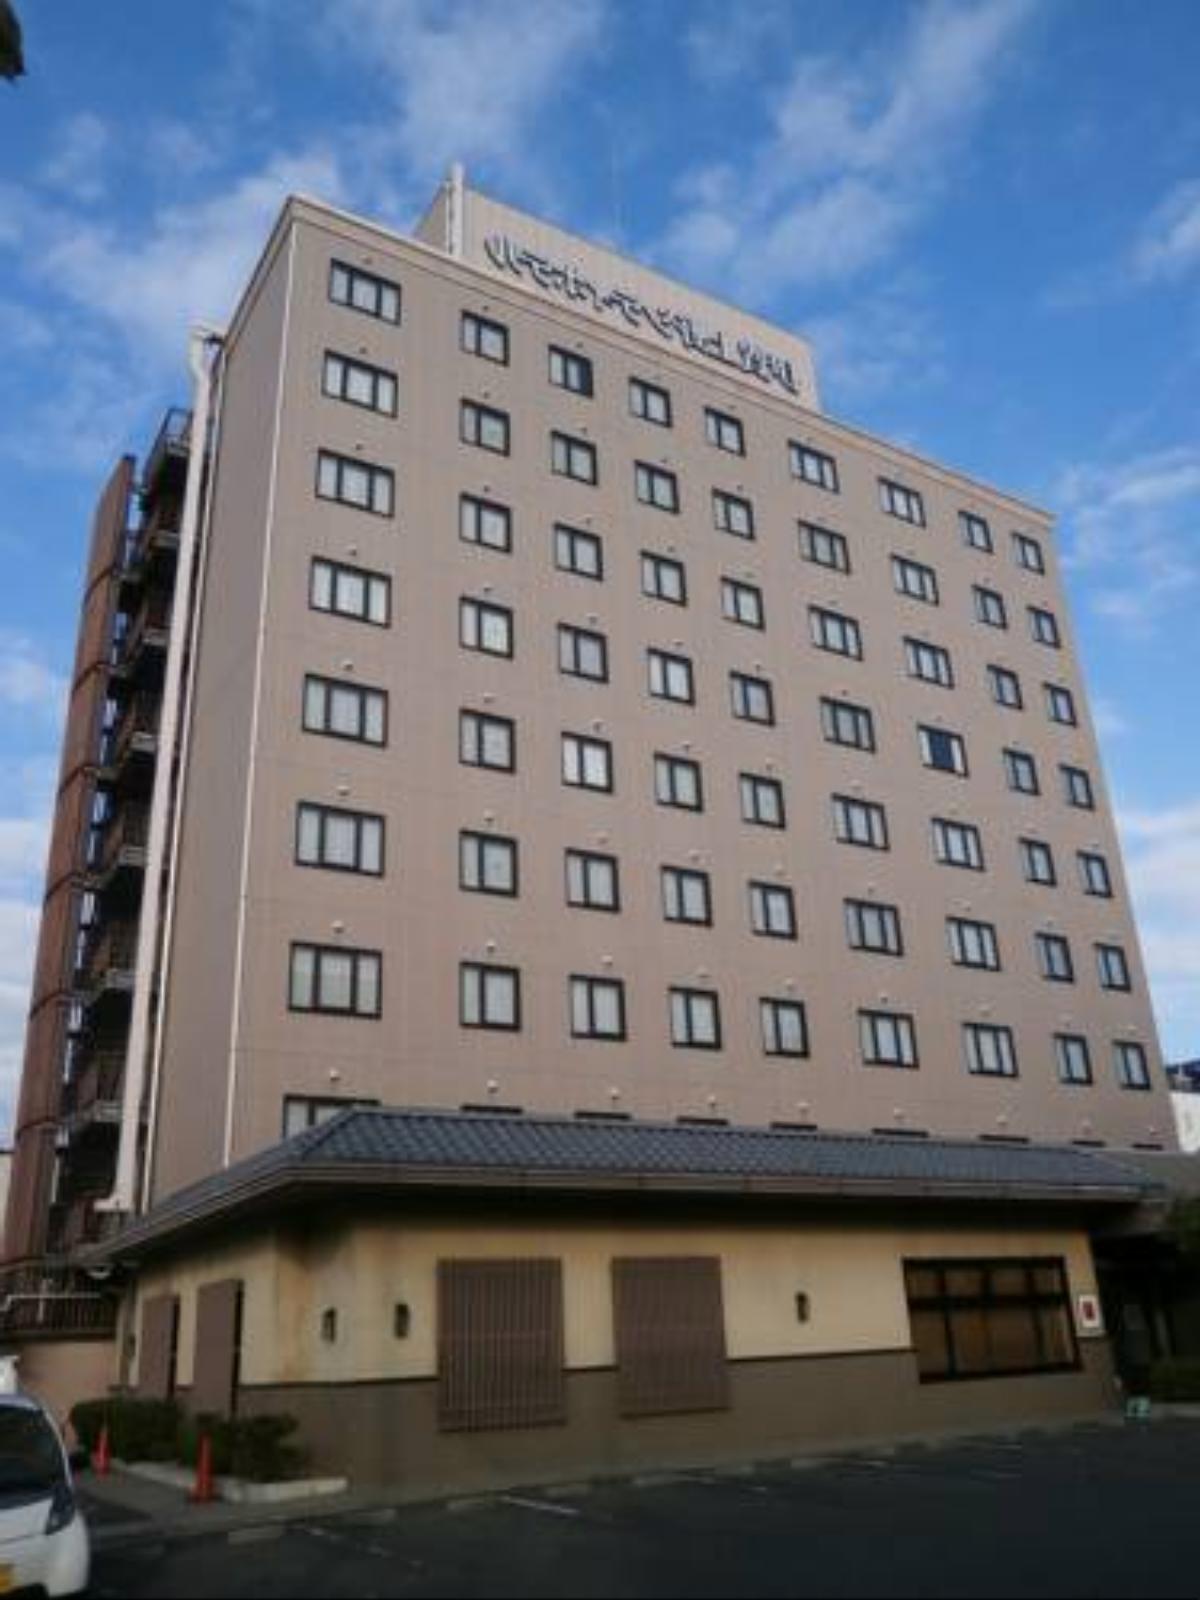 Iga Ueno City Hotel Hotel Iga Japan